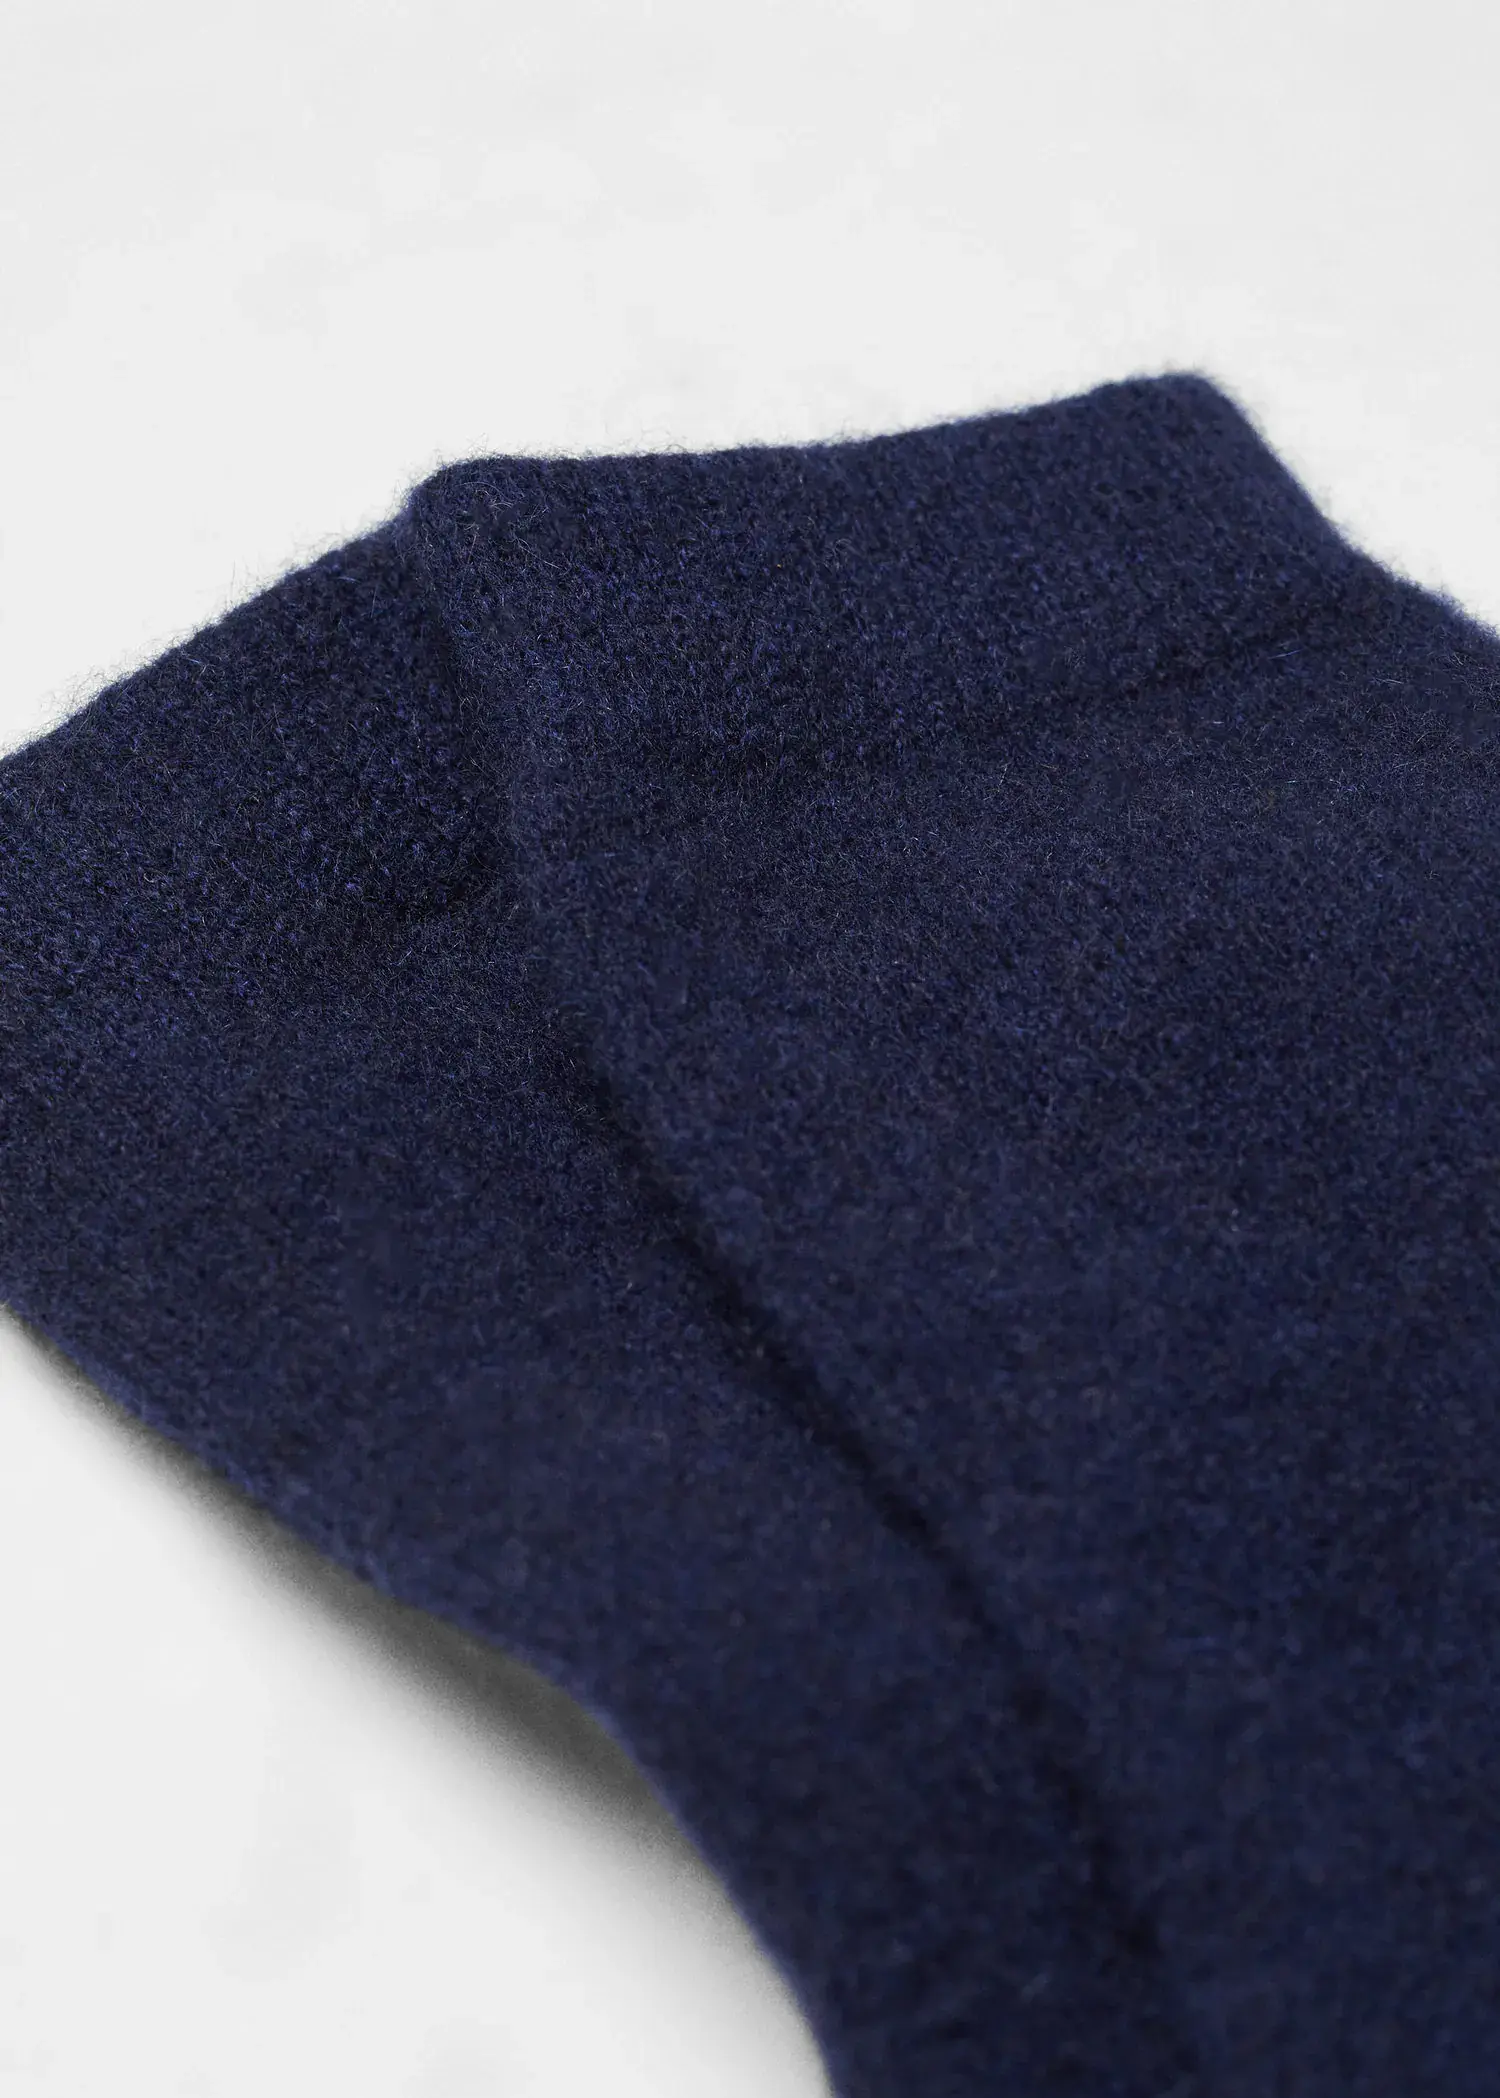 Mango Cashmere knitted socks. 2